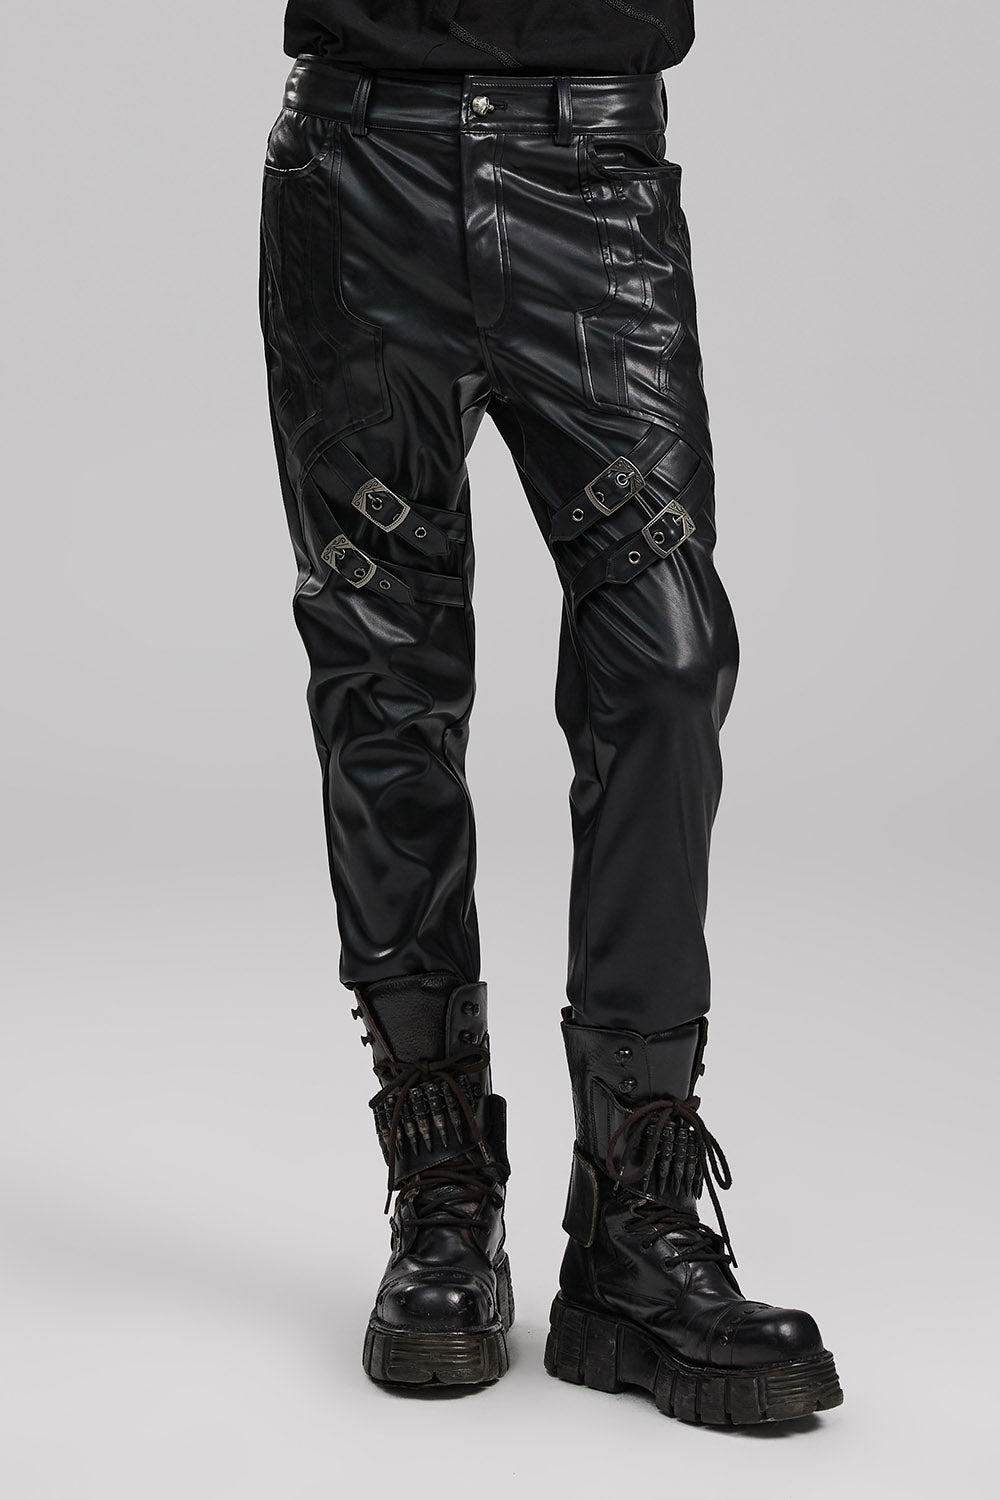 mens black leather trousers plus size